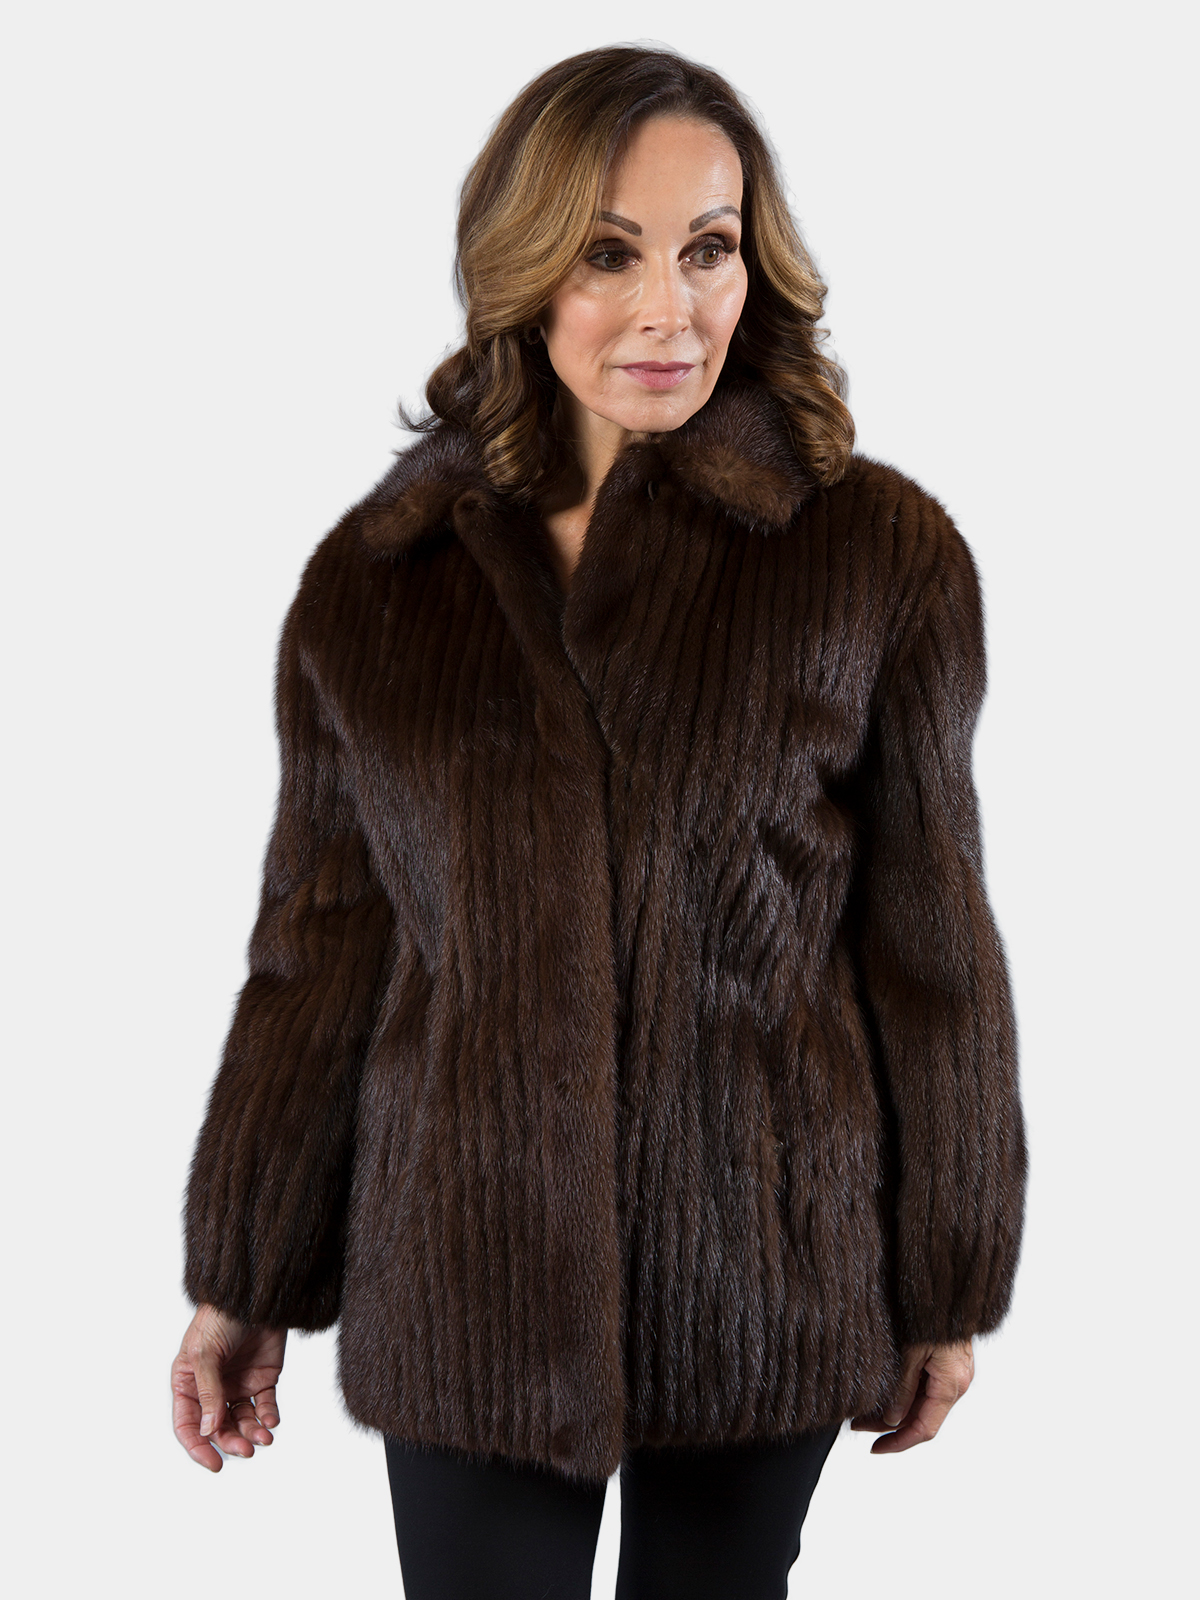 Woman's Mahogany Mink Fur Jacket Cord Cut Style